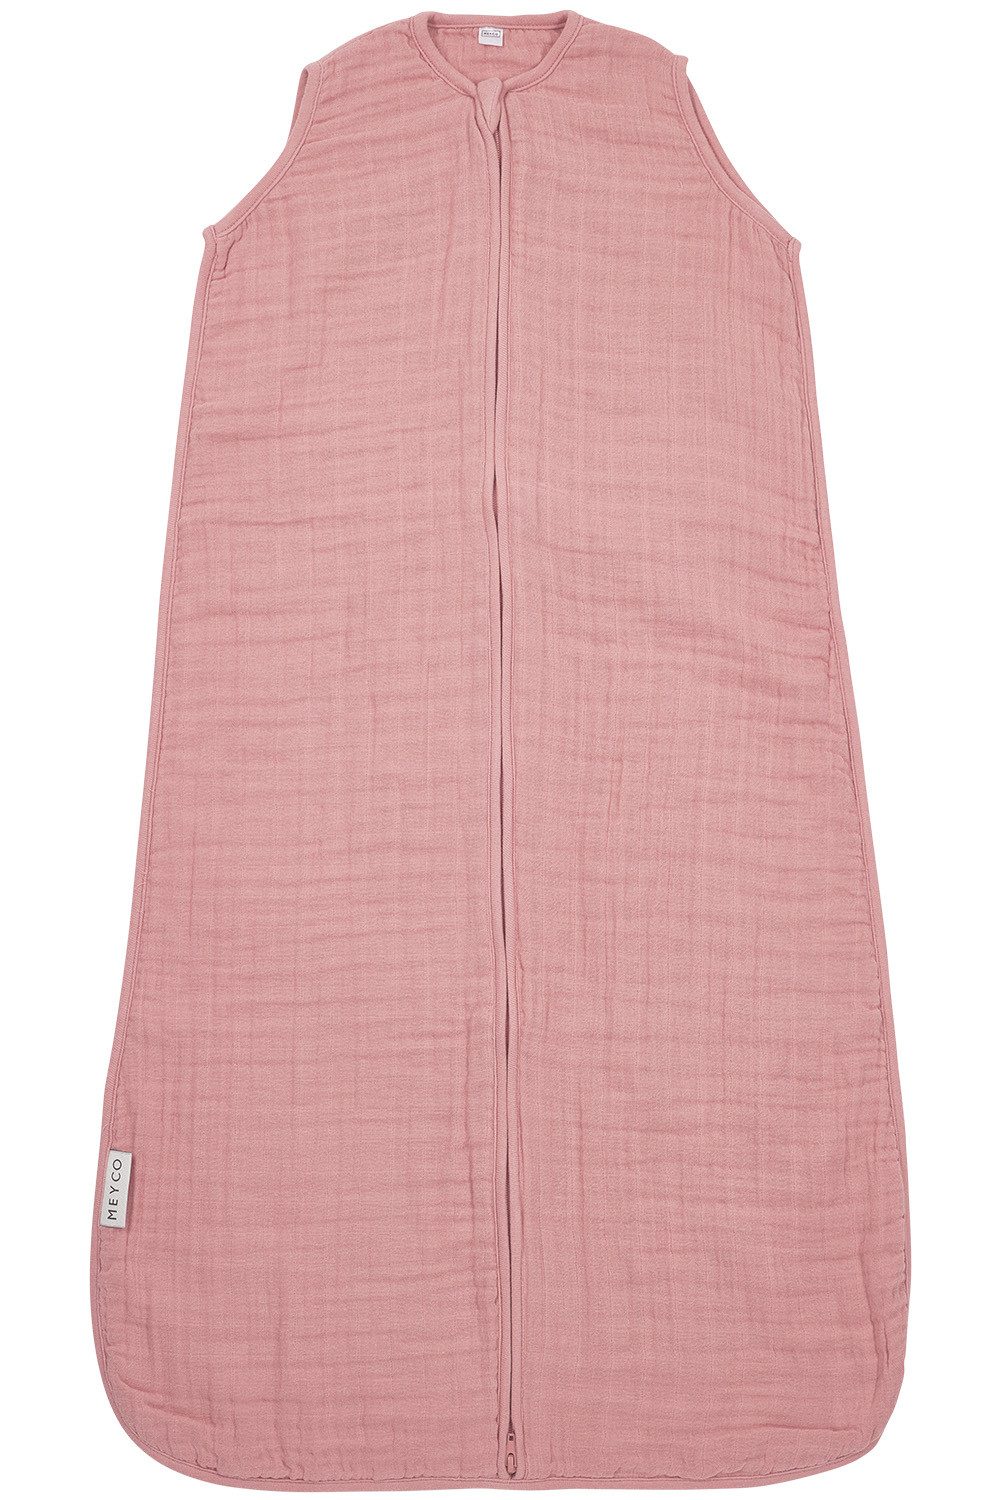 Meyco Baby Babyschlafsack Uni Old Pink (1 tlg), 60cm